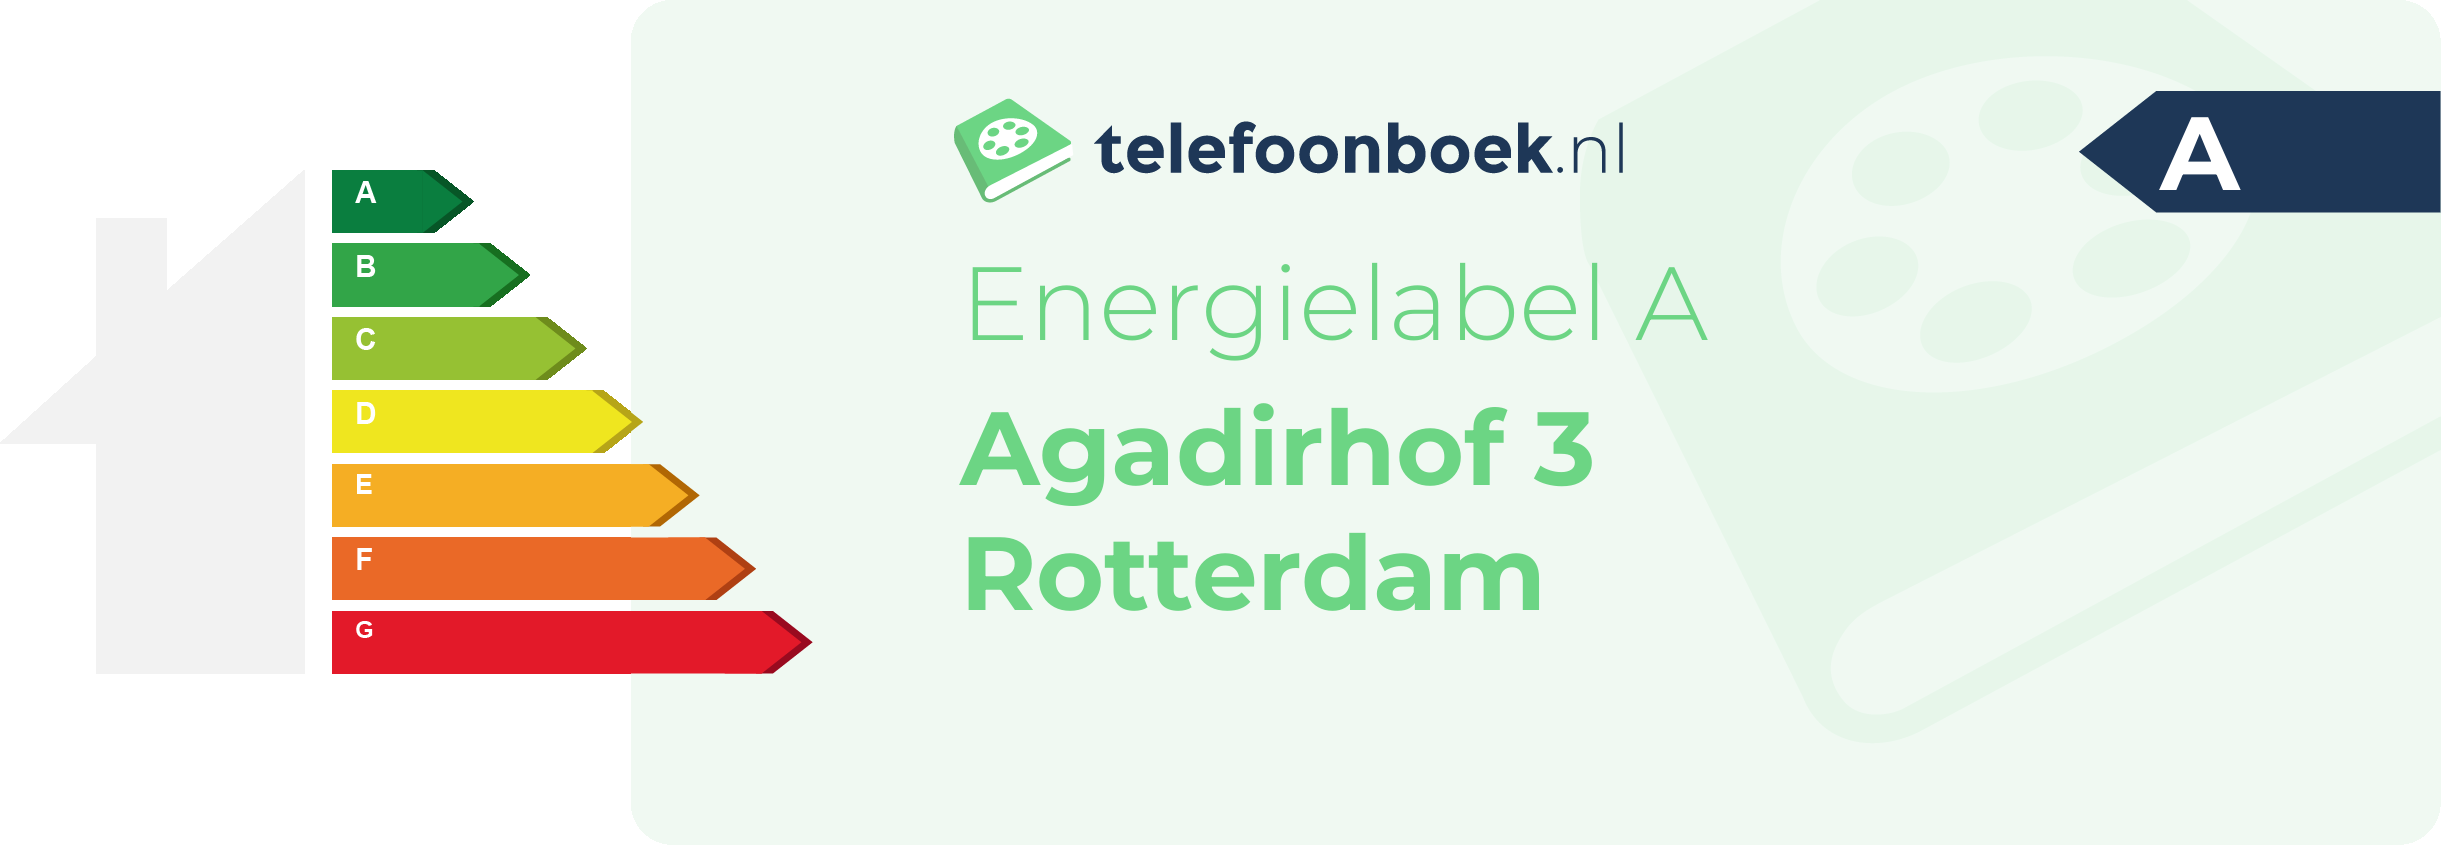 Energielabel Agadirhof 3 Rotterdam